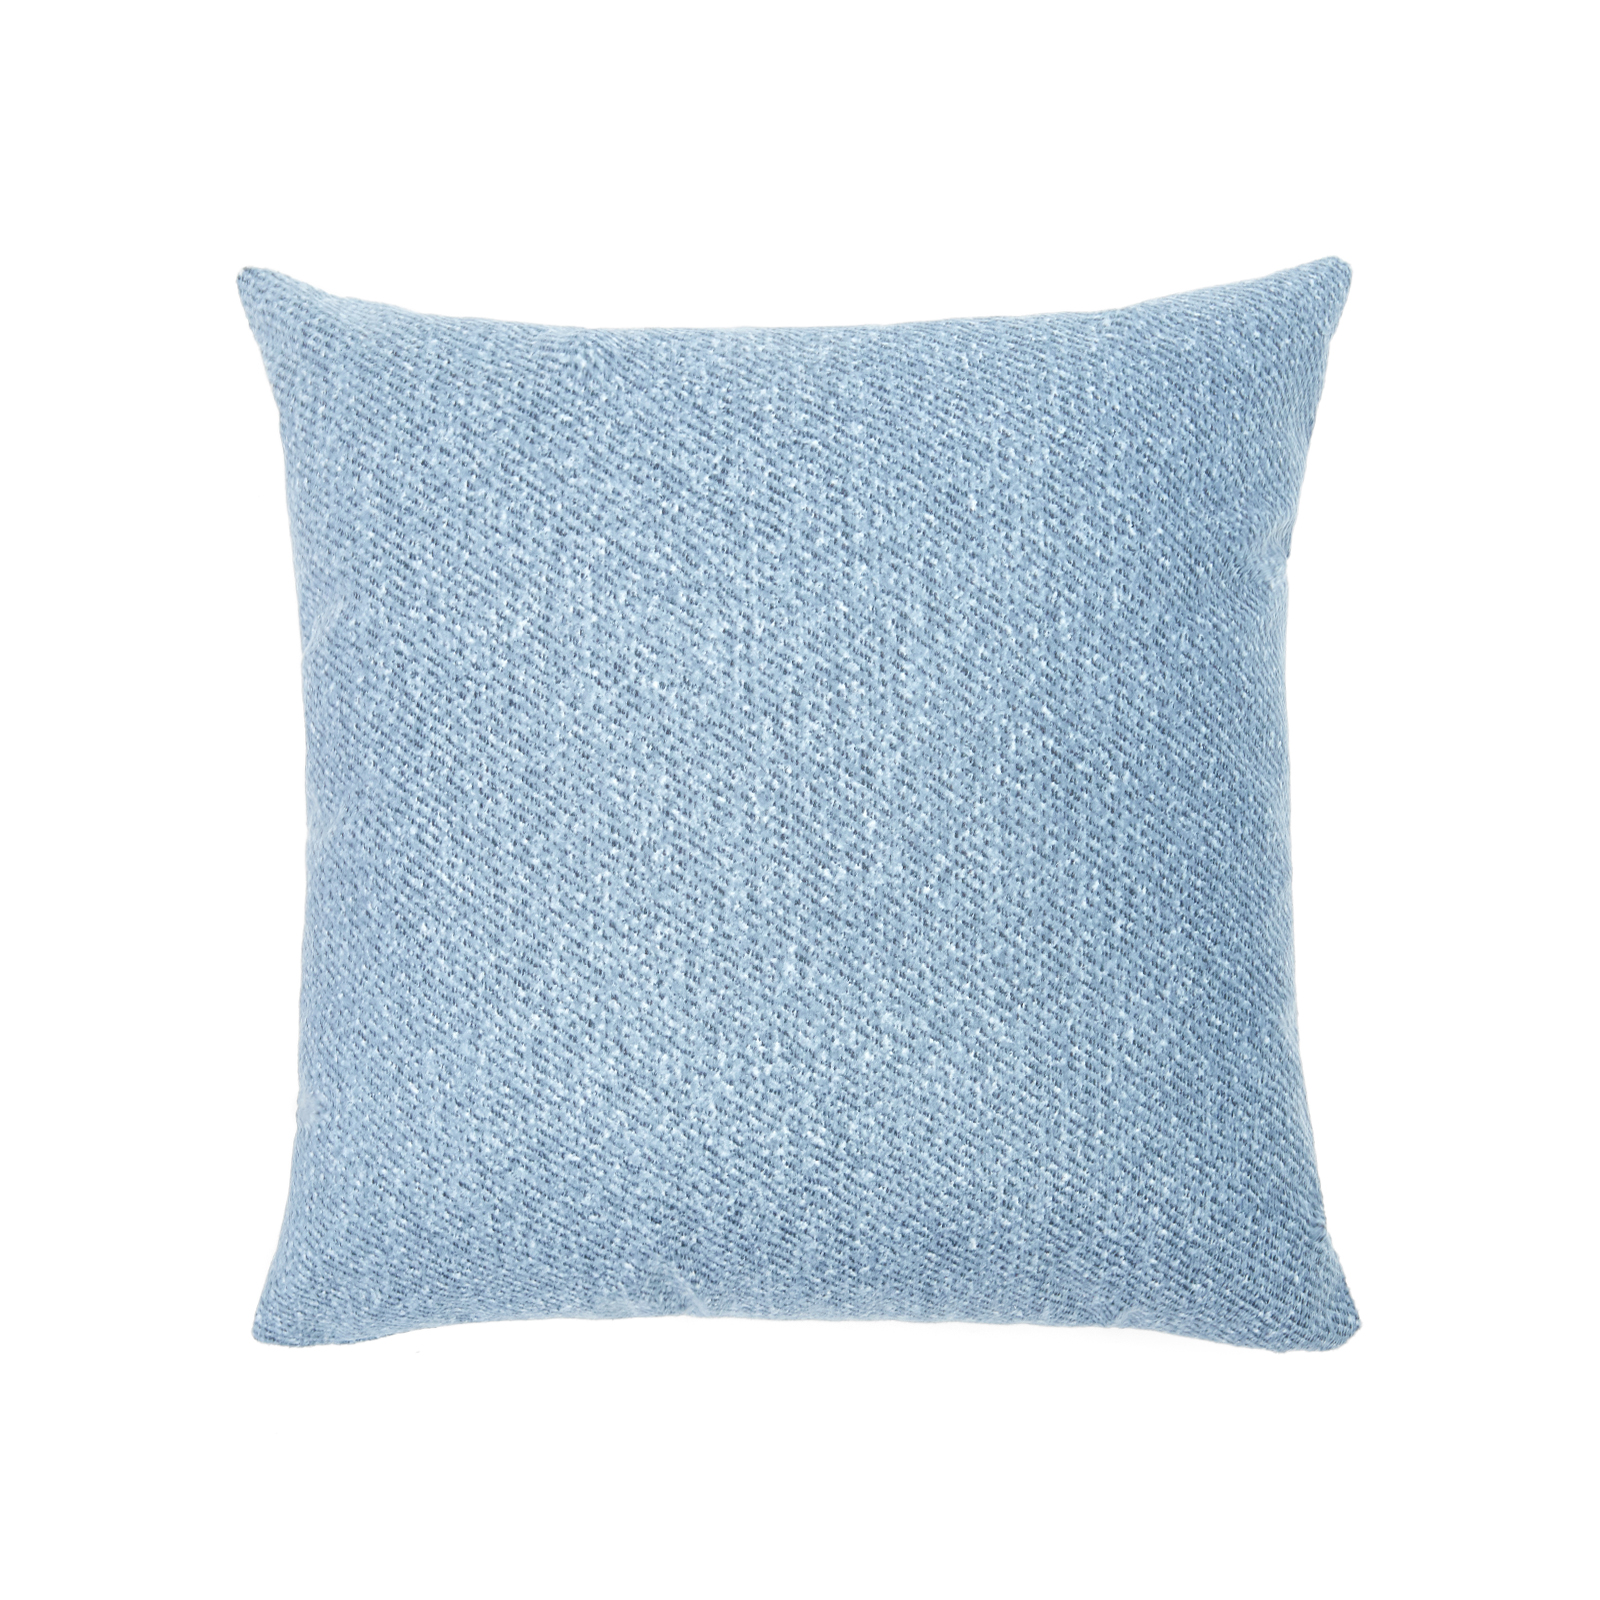 Подушка декоративная Mirenna подушка для растяжки голубой